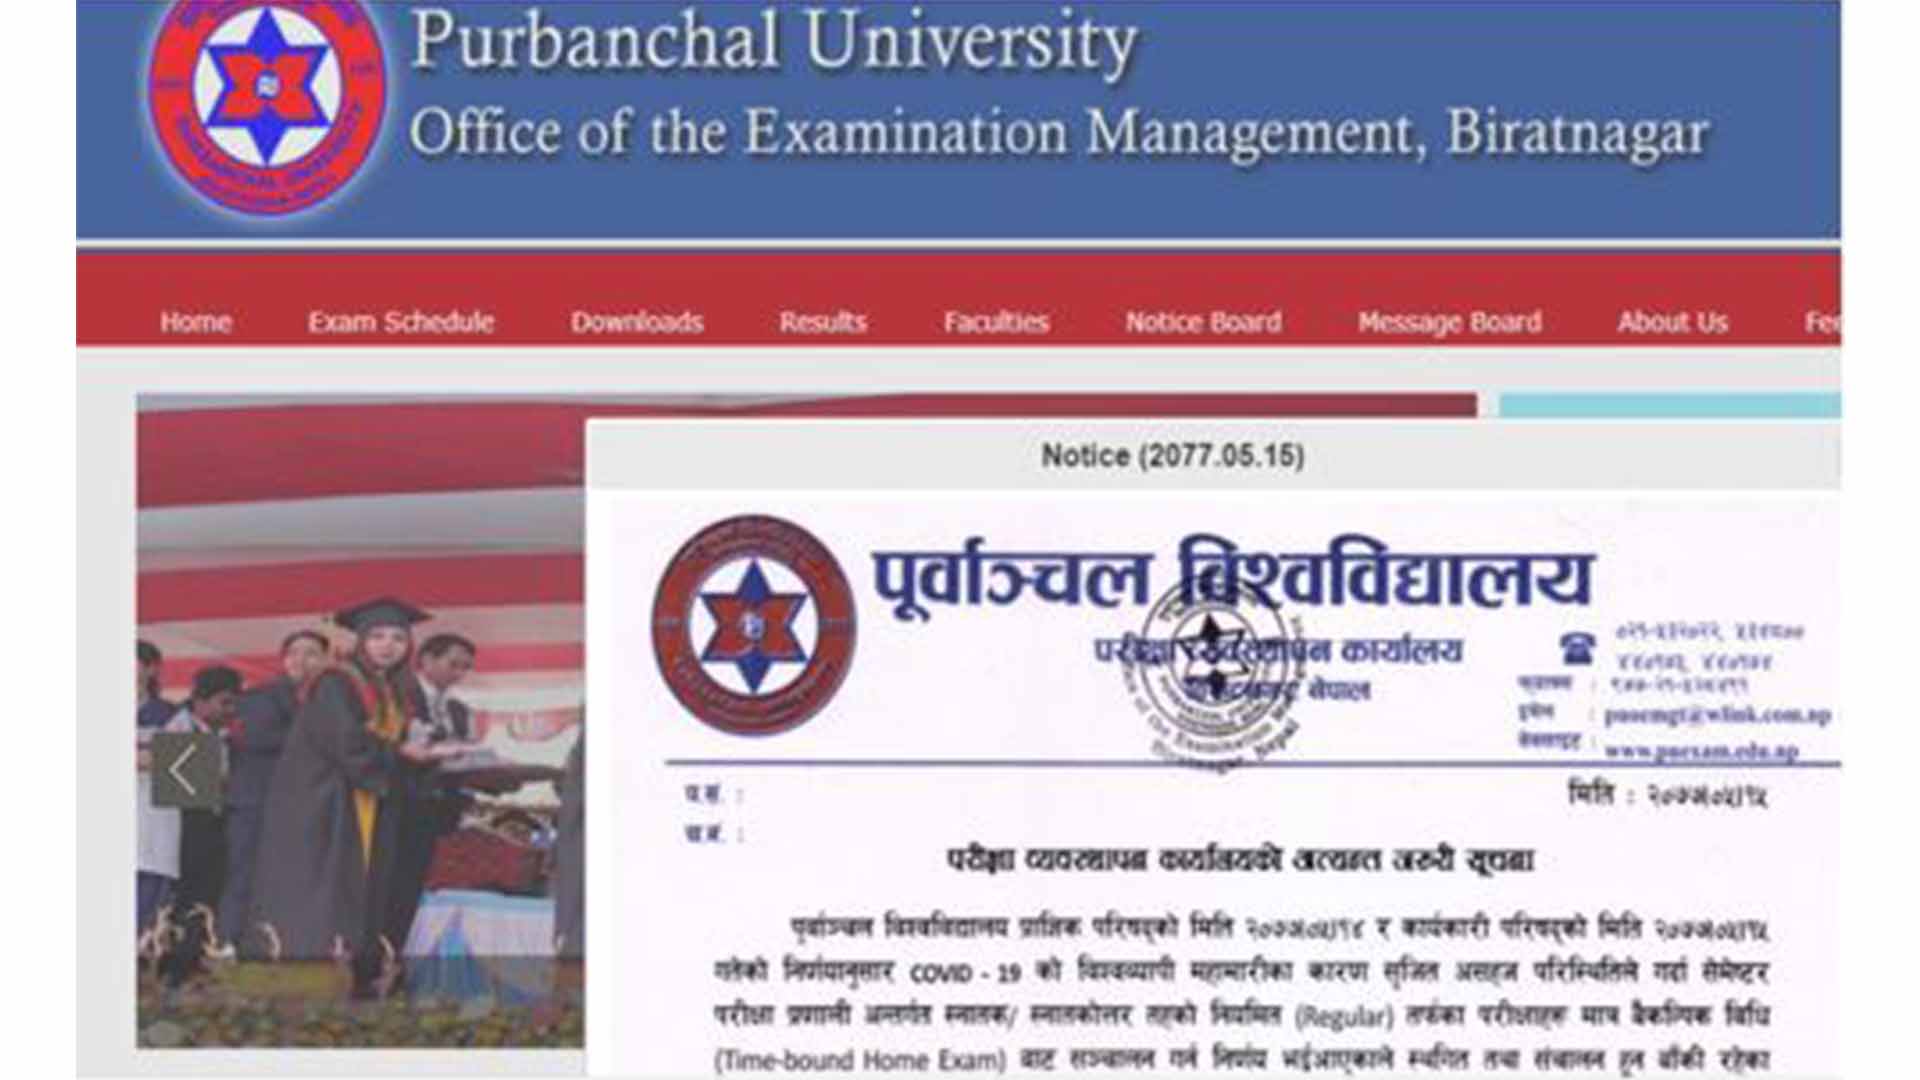 Purbanchal University publishes exam date